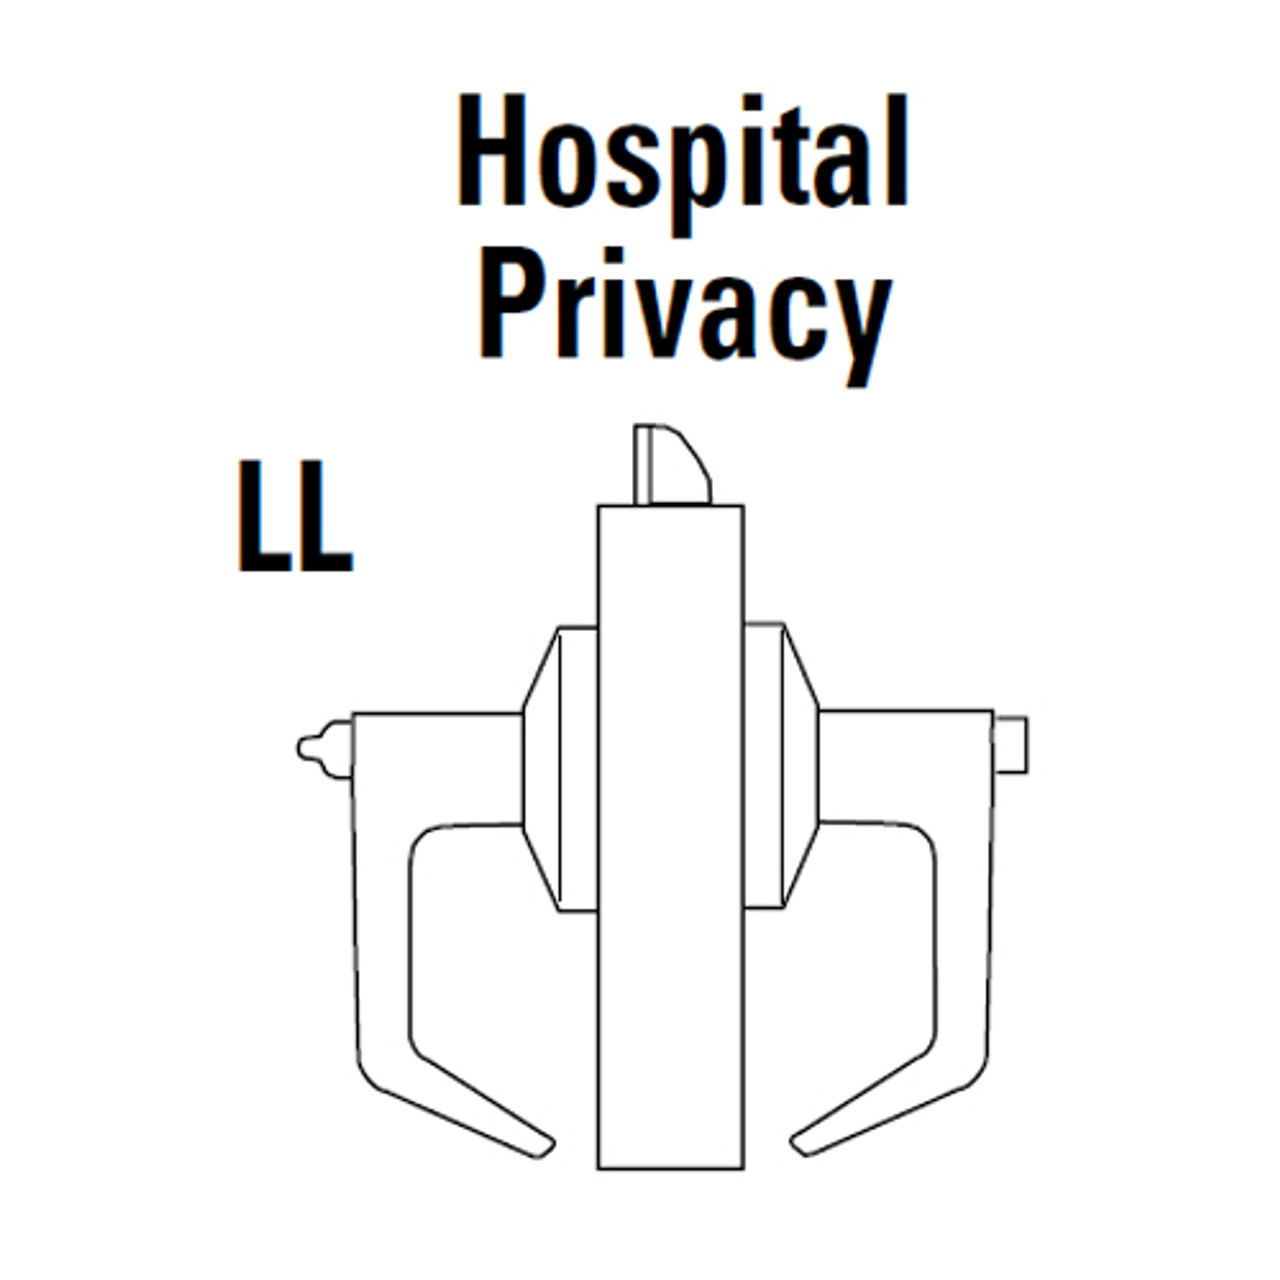 9K30LL14KS3625LM Best 9K Series Hospital Privacy Heavy Duty Cylindrical Lever Locks in Bright Chrome